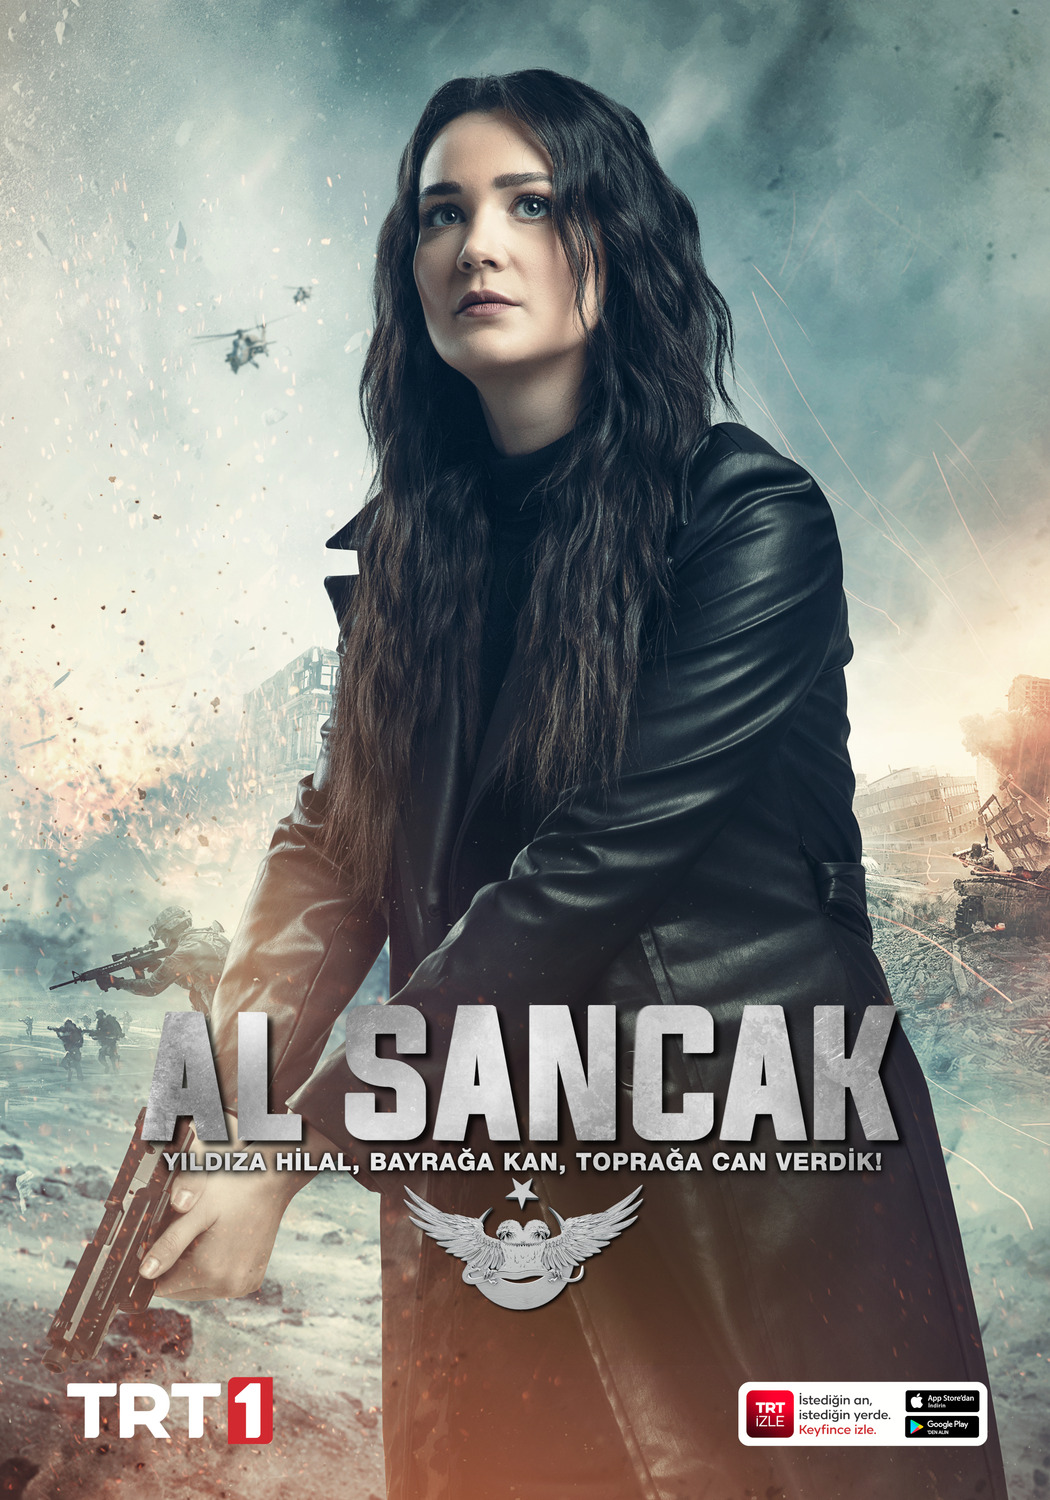 Extra Large TV Poster Image for Al Sancak (#15 of 20)